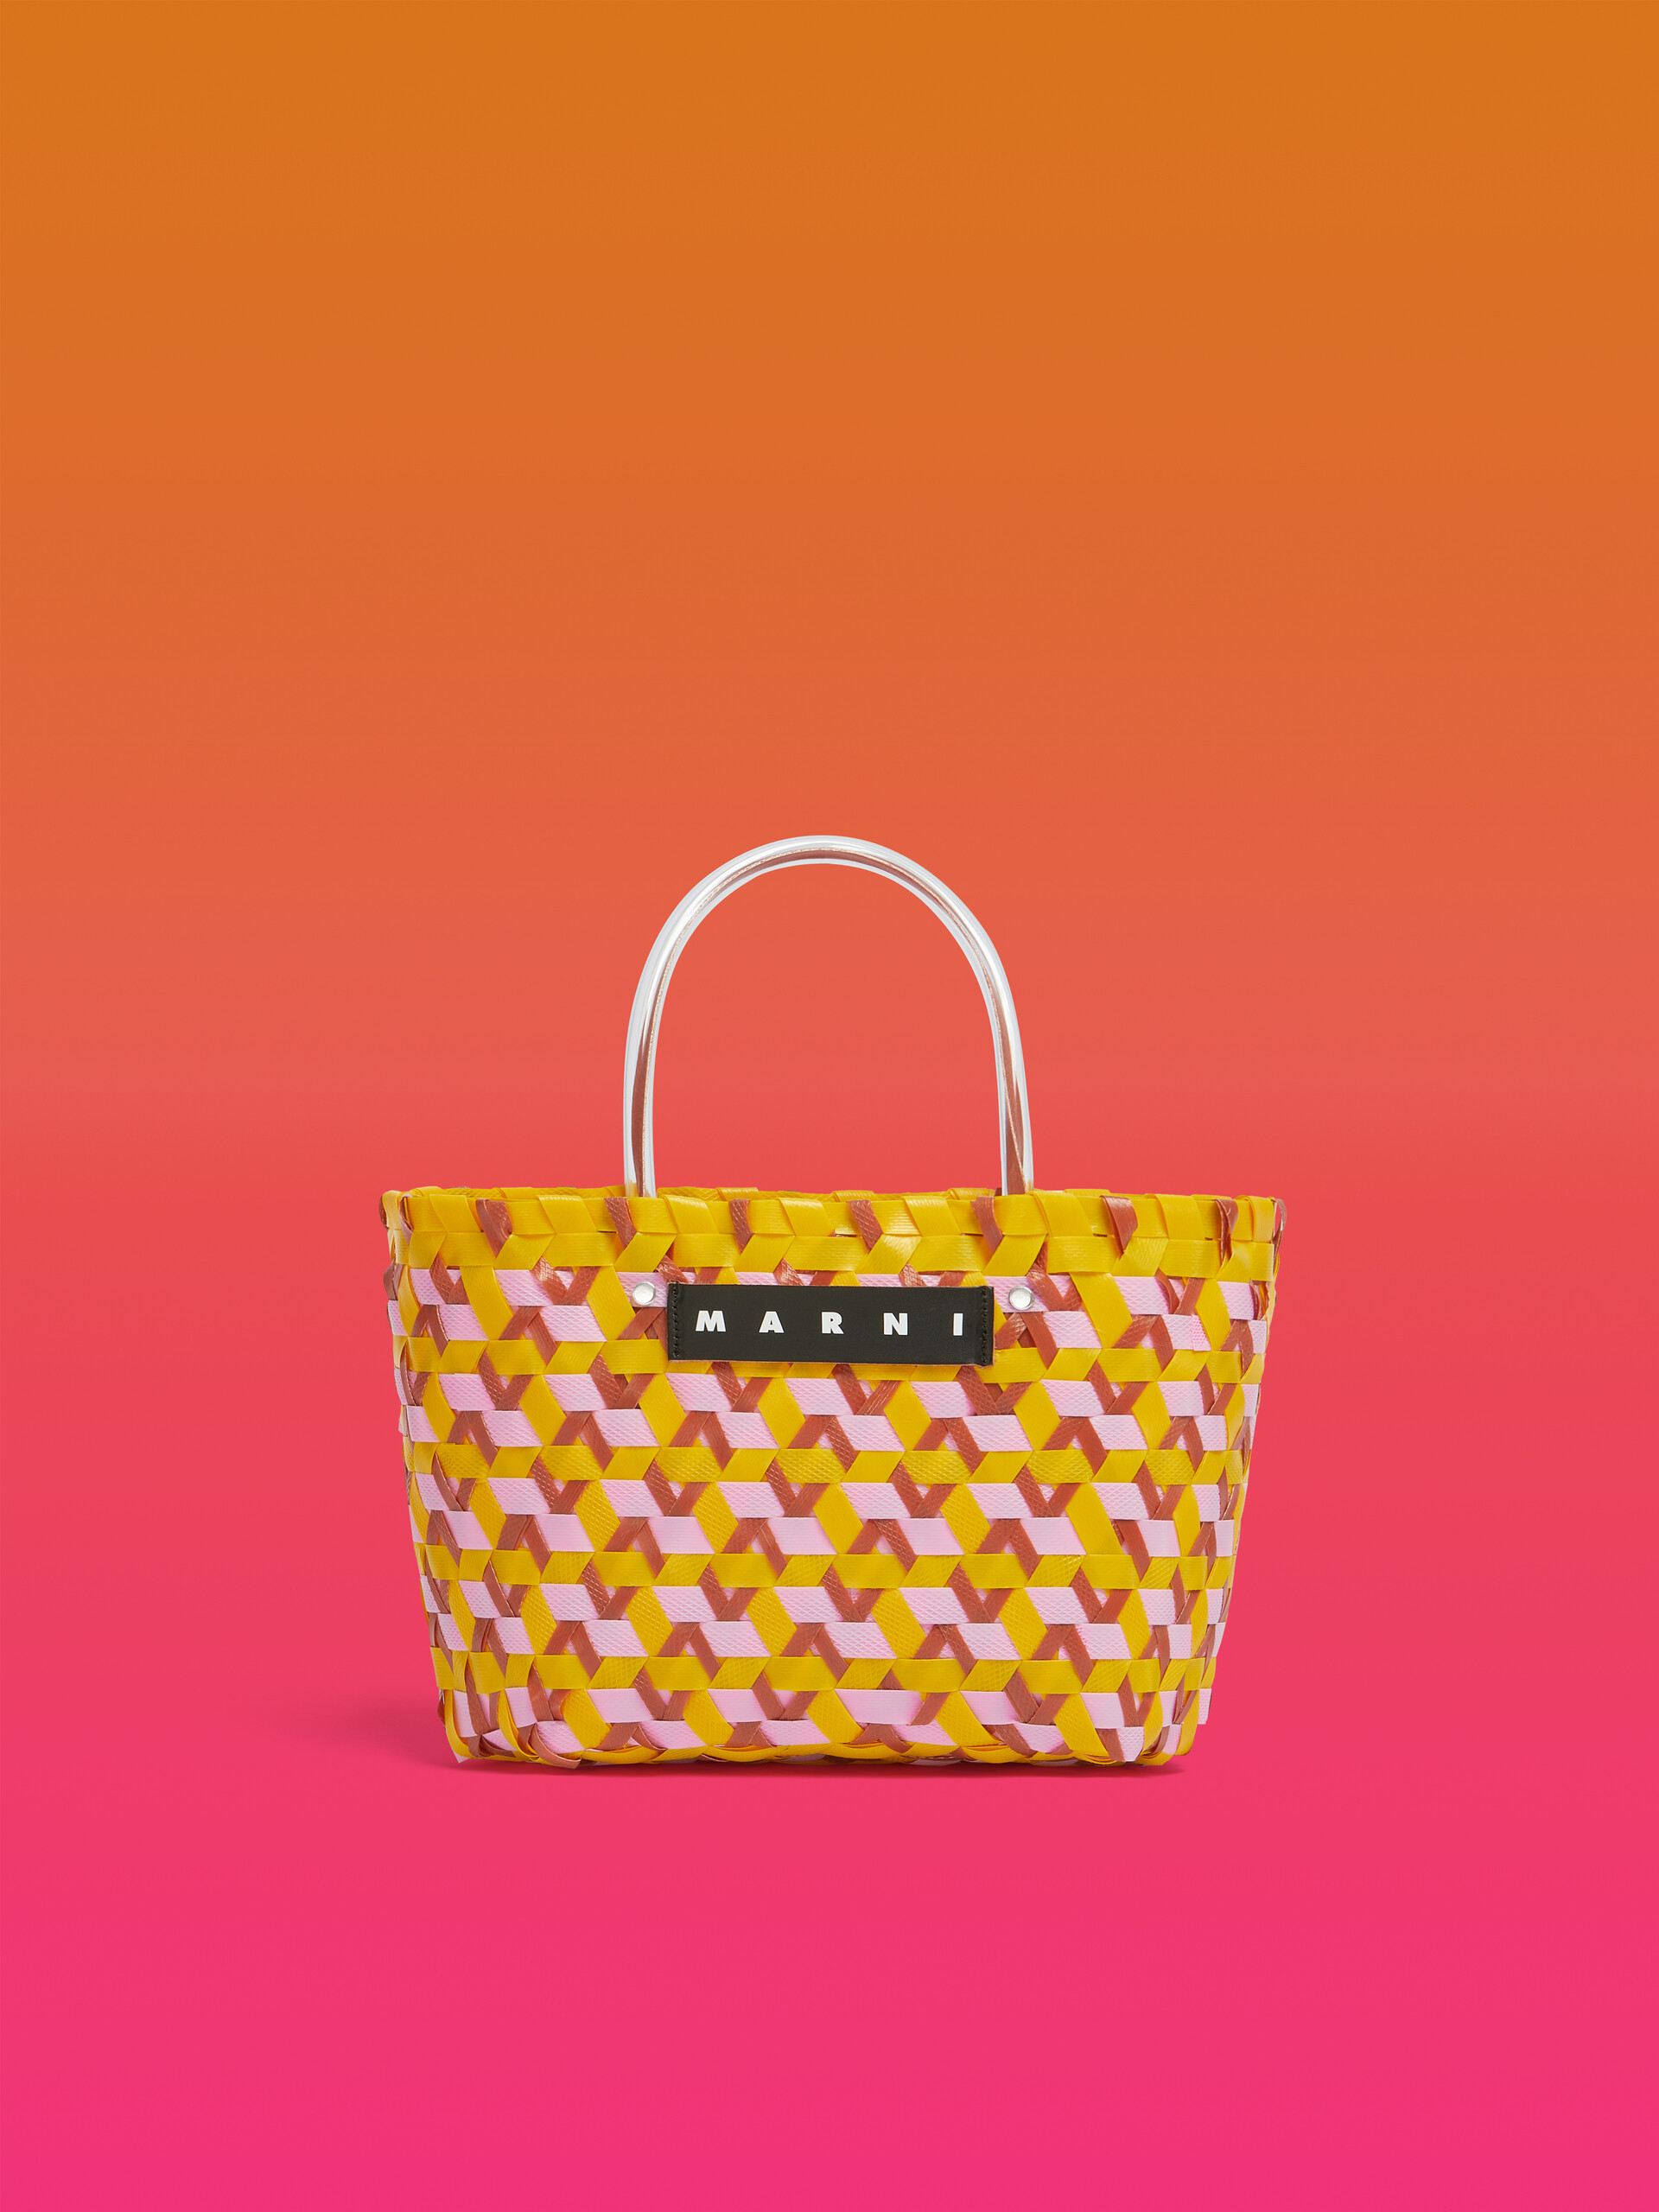 Marni logo-print tote bag - Yellow